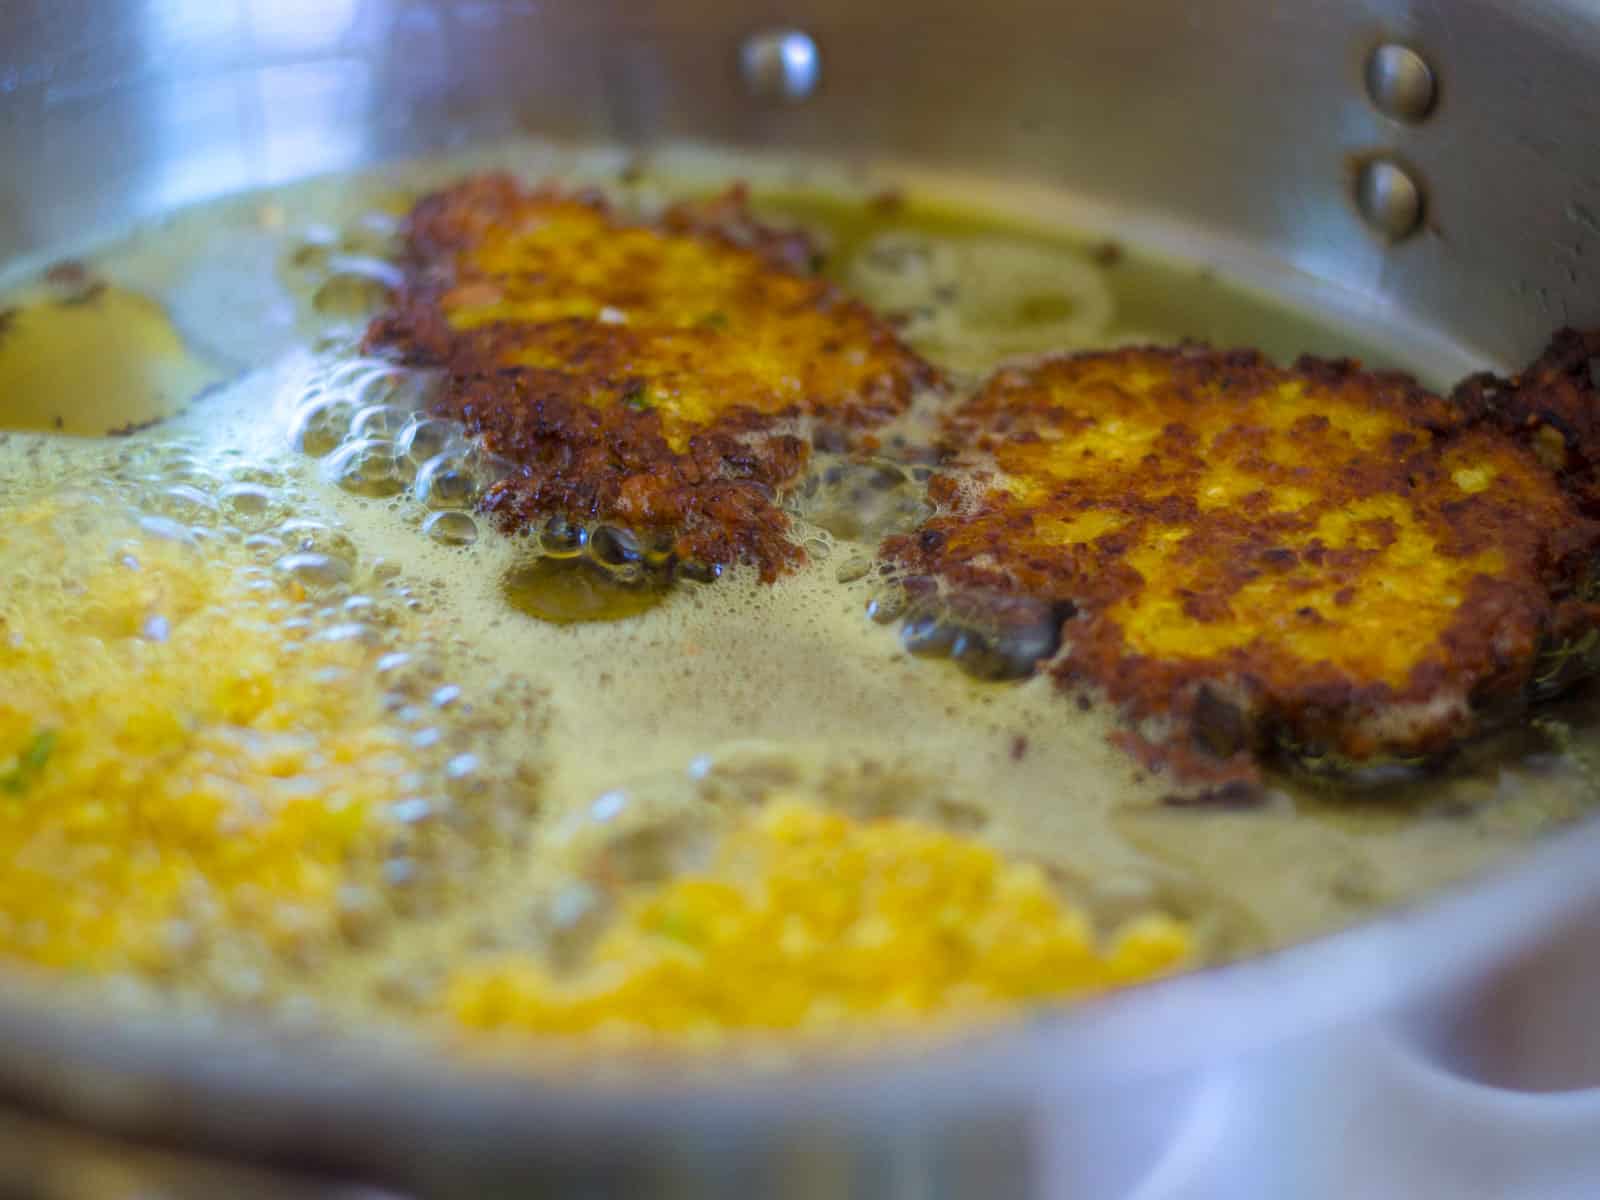 Fry the cauliflower latkes until golden brown on both sides.